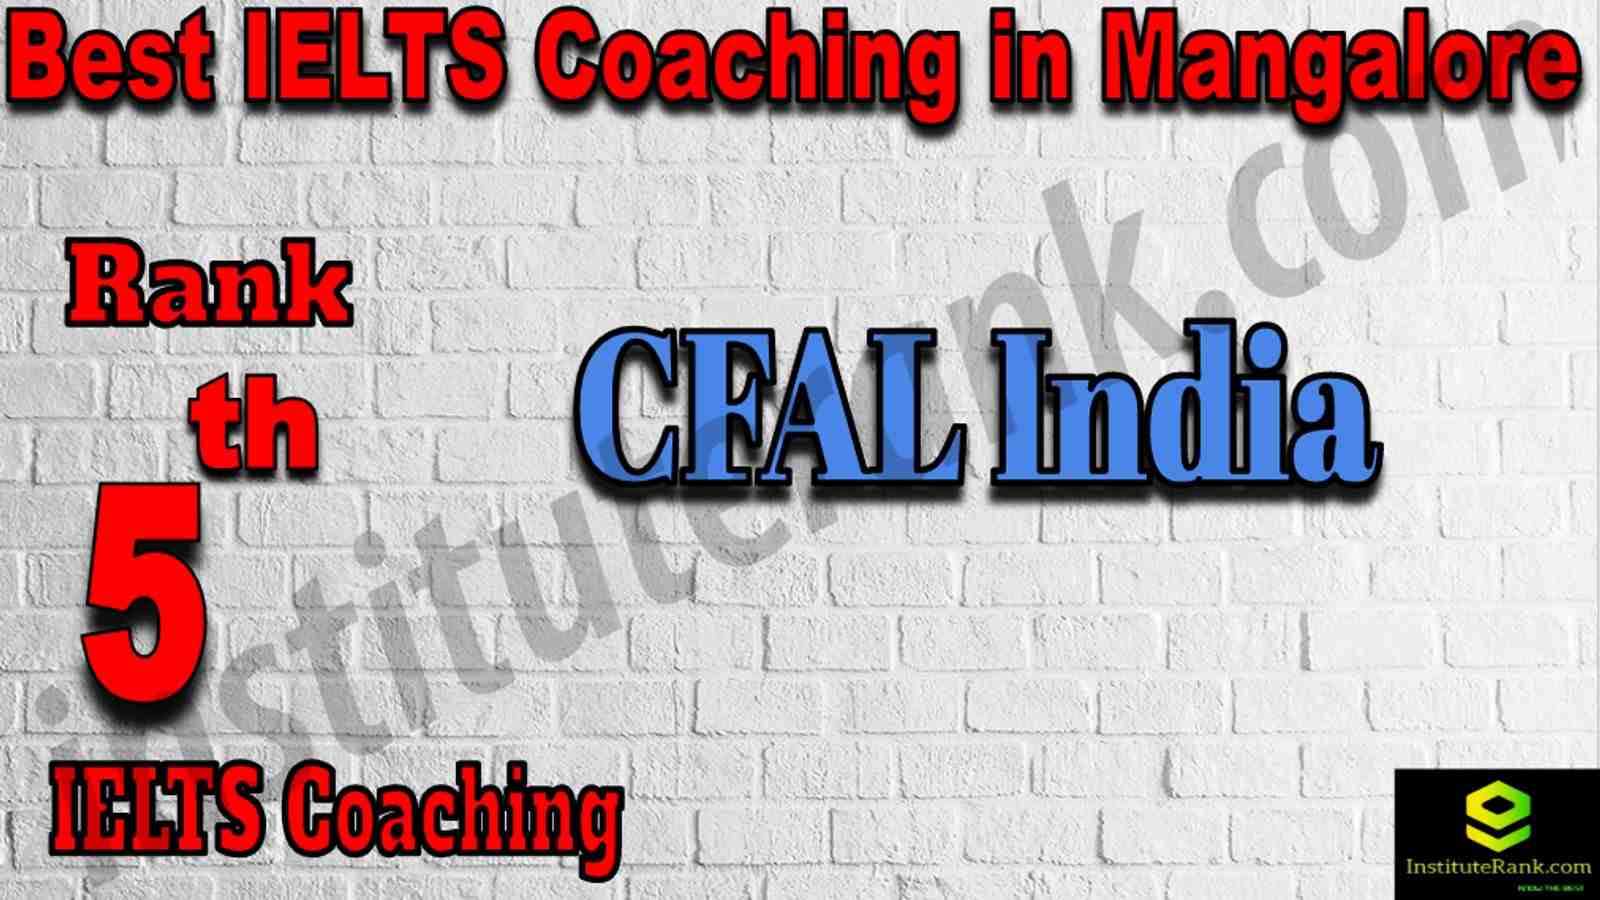 5th Best IELTS Coaching in Mangalore